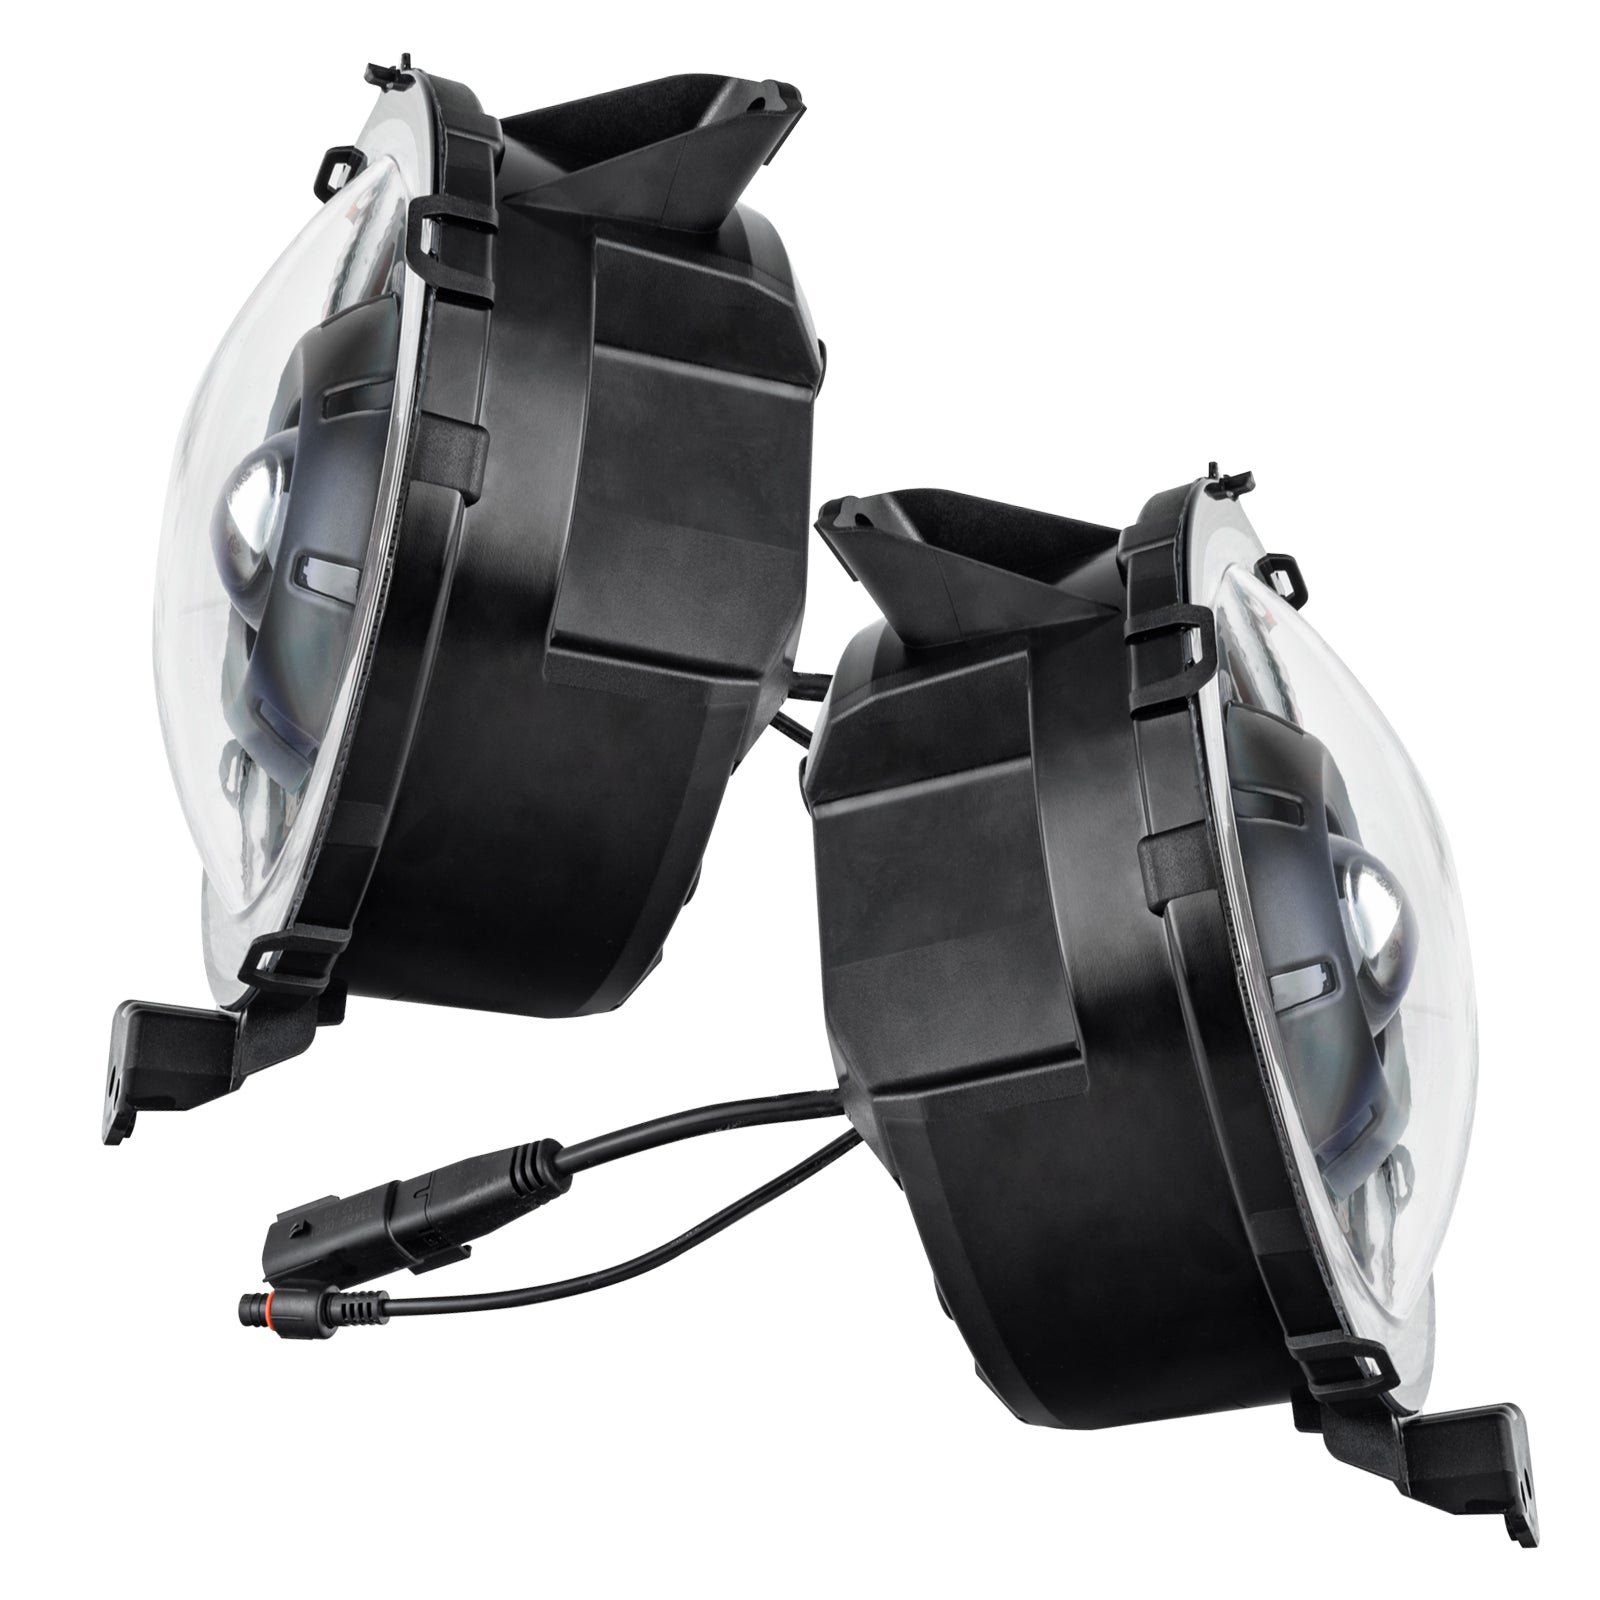 Oculus(TM) Bi-LED Projector Headlights -Jeep Wrangler JL/Gladiator JT